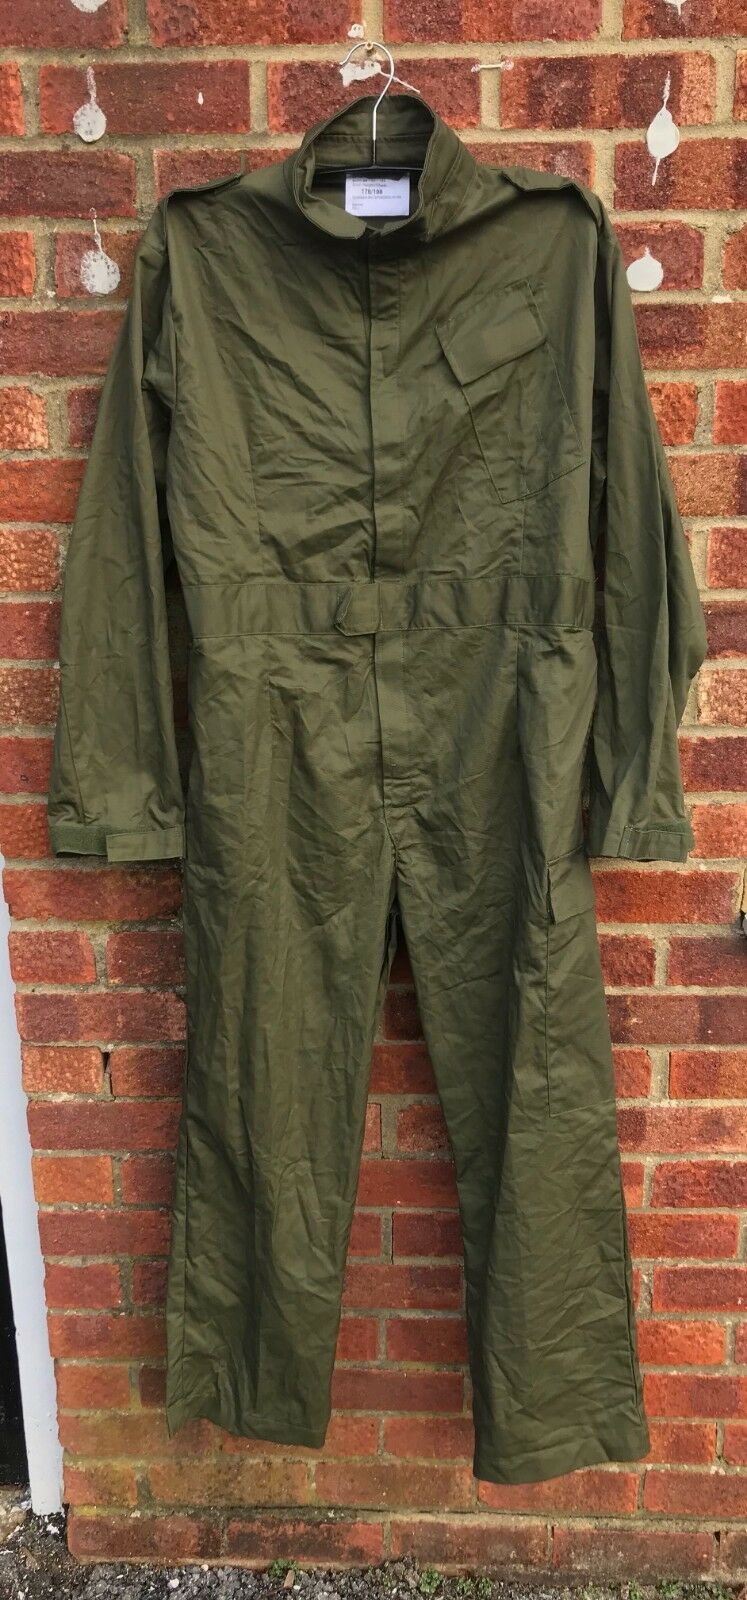 Details about  / Unisex Vintage British Army Workwear Overalls Jumpsuit Boiler Suit Green S M L